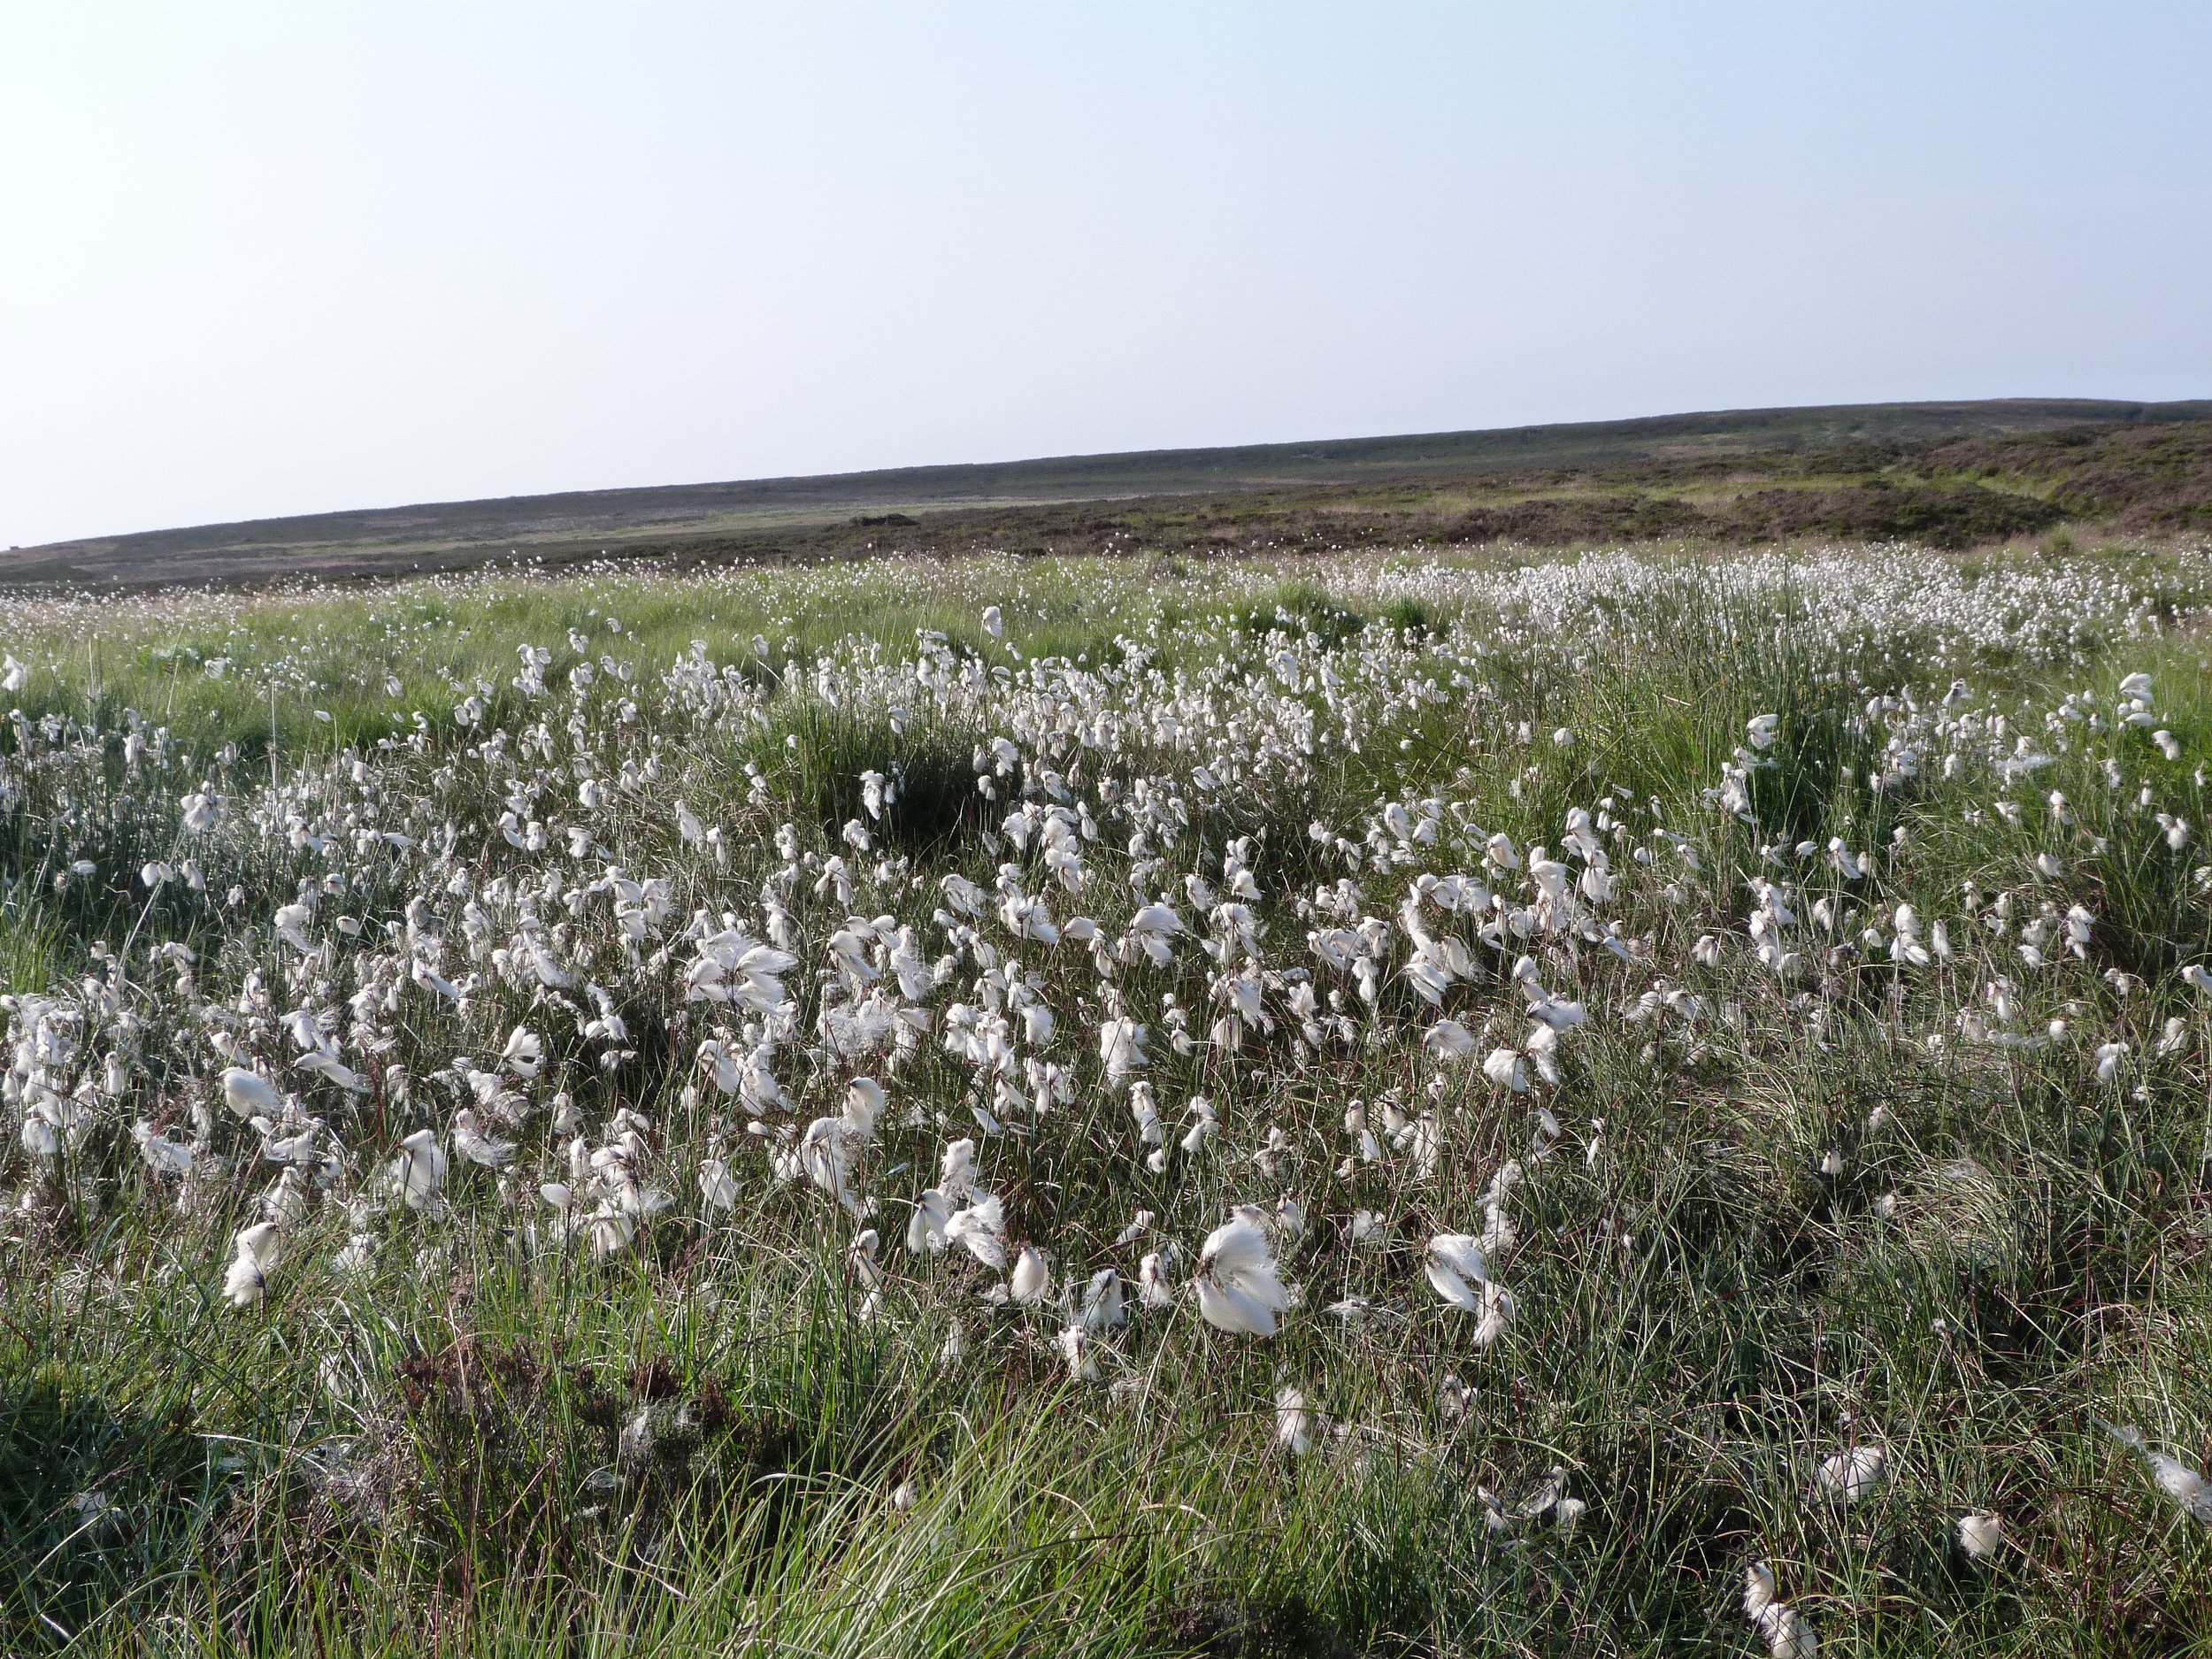 Bog cotton on Walshaw Moor